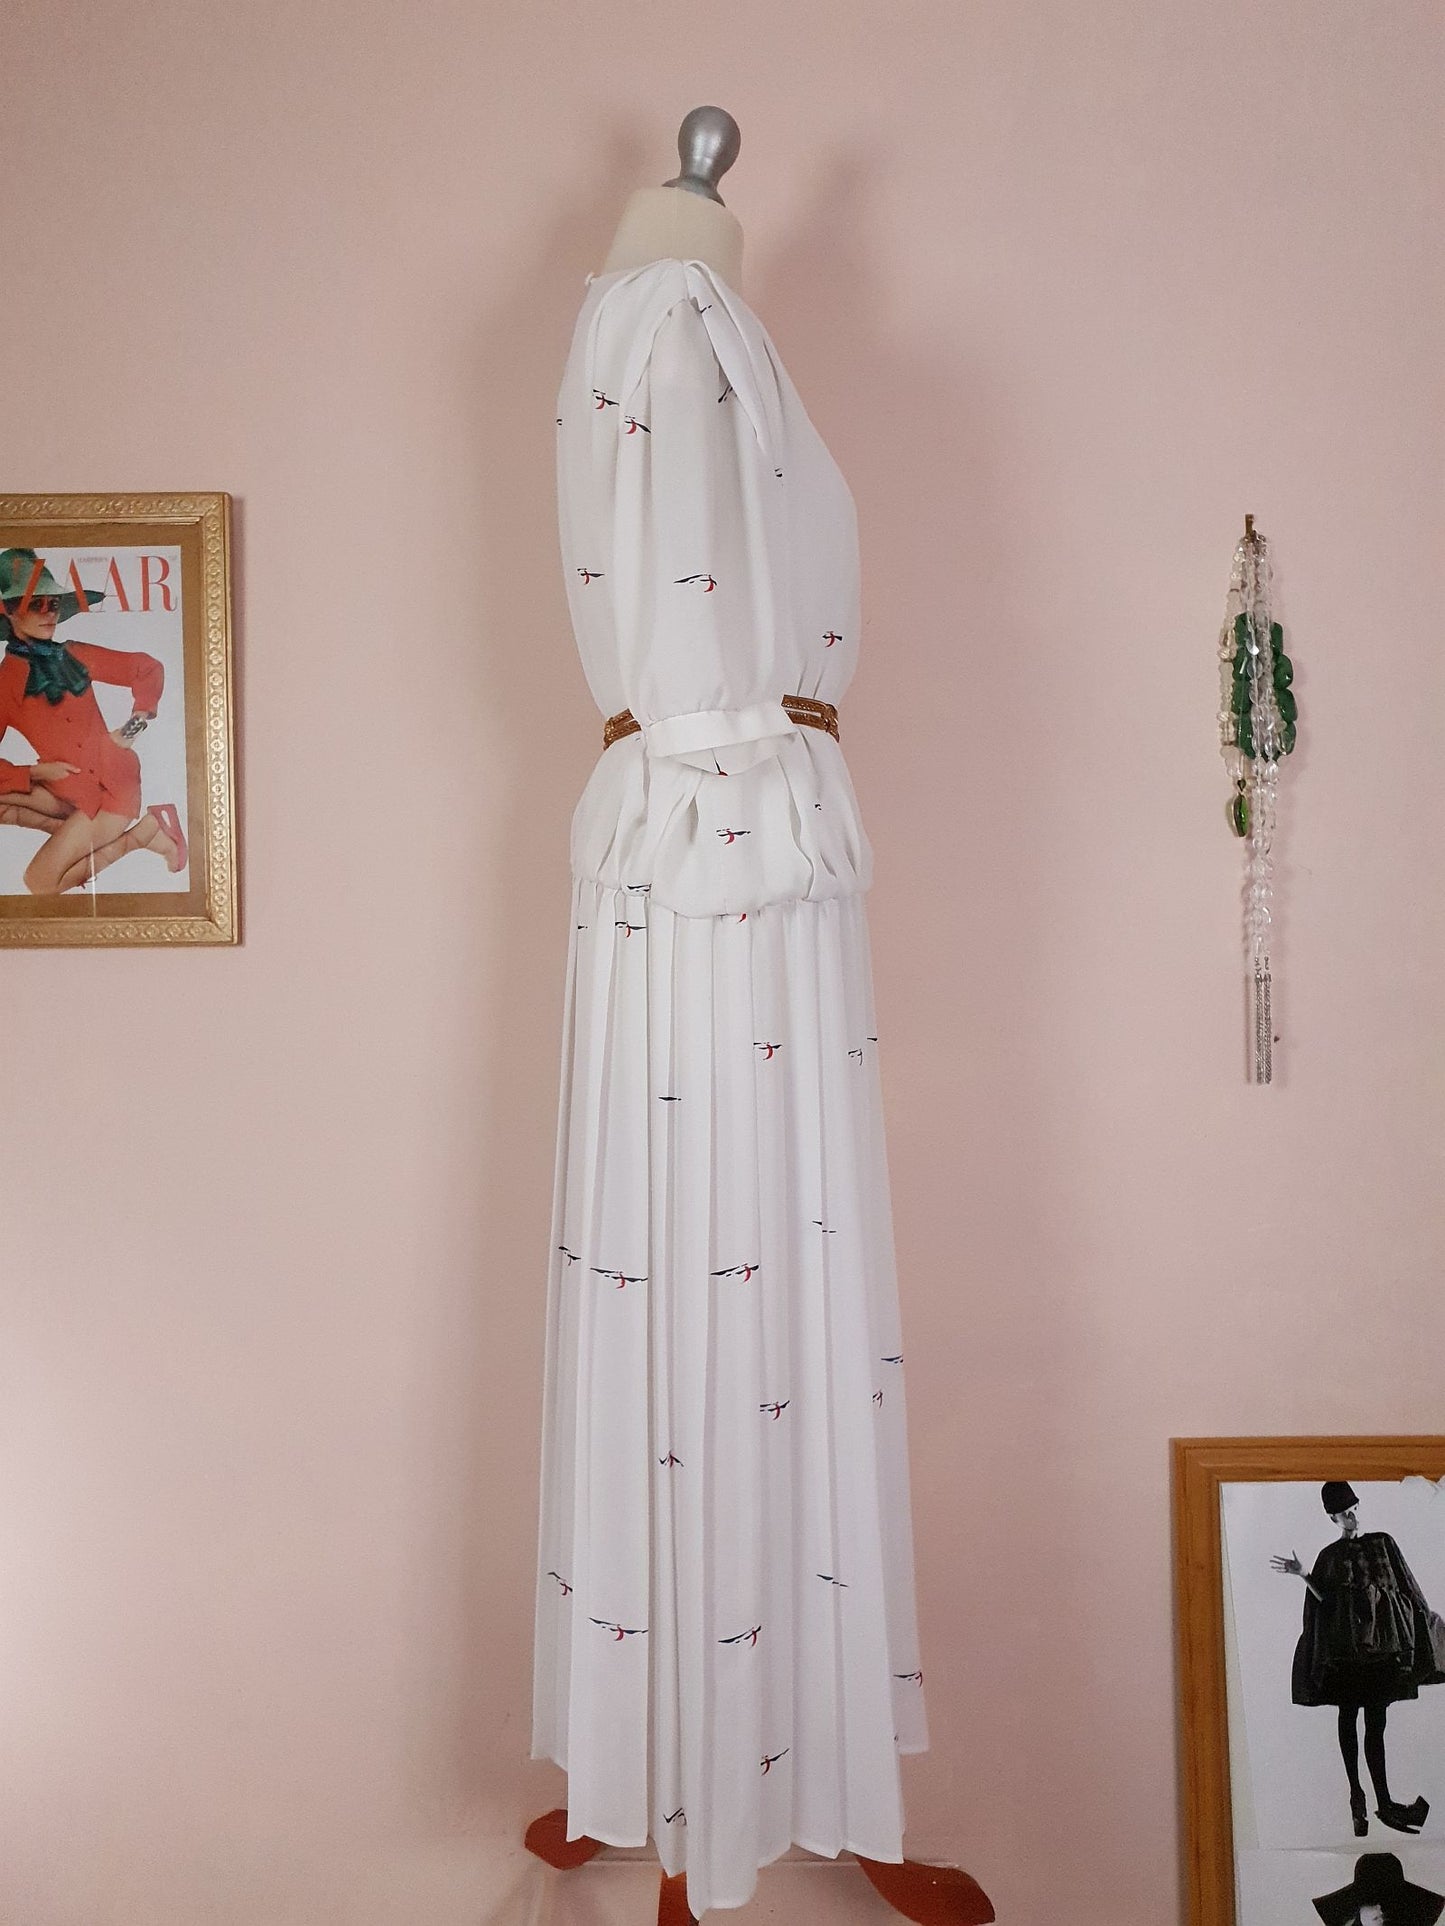 Vintage White Chiffon Pleated Dress 1980s Midi - Size 16/18 Abstract Print